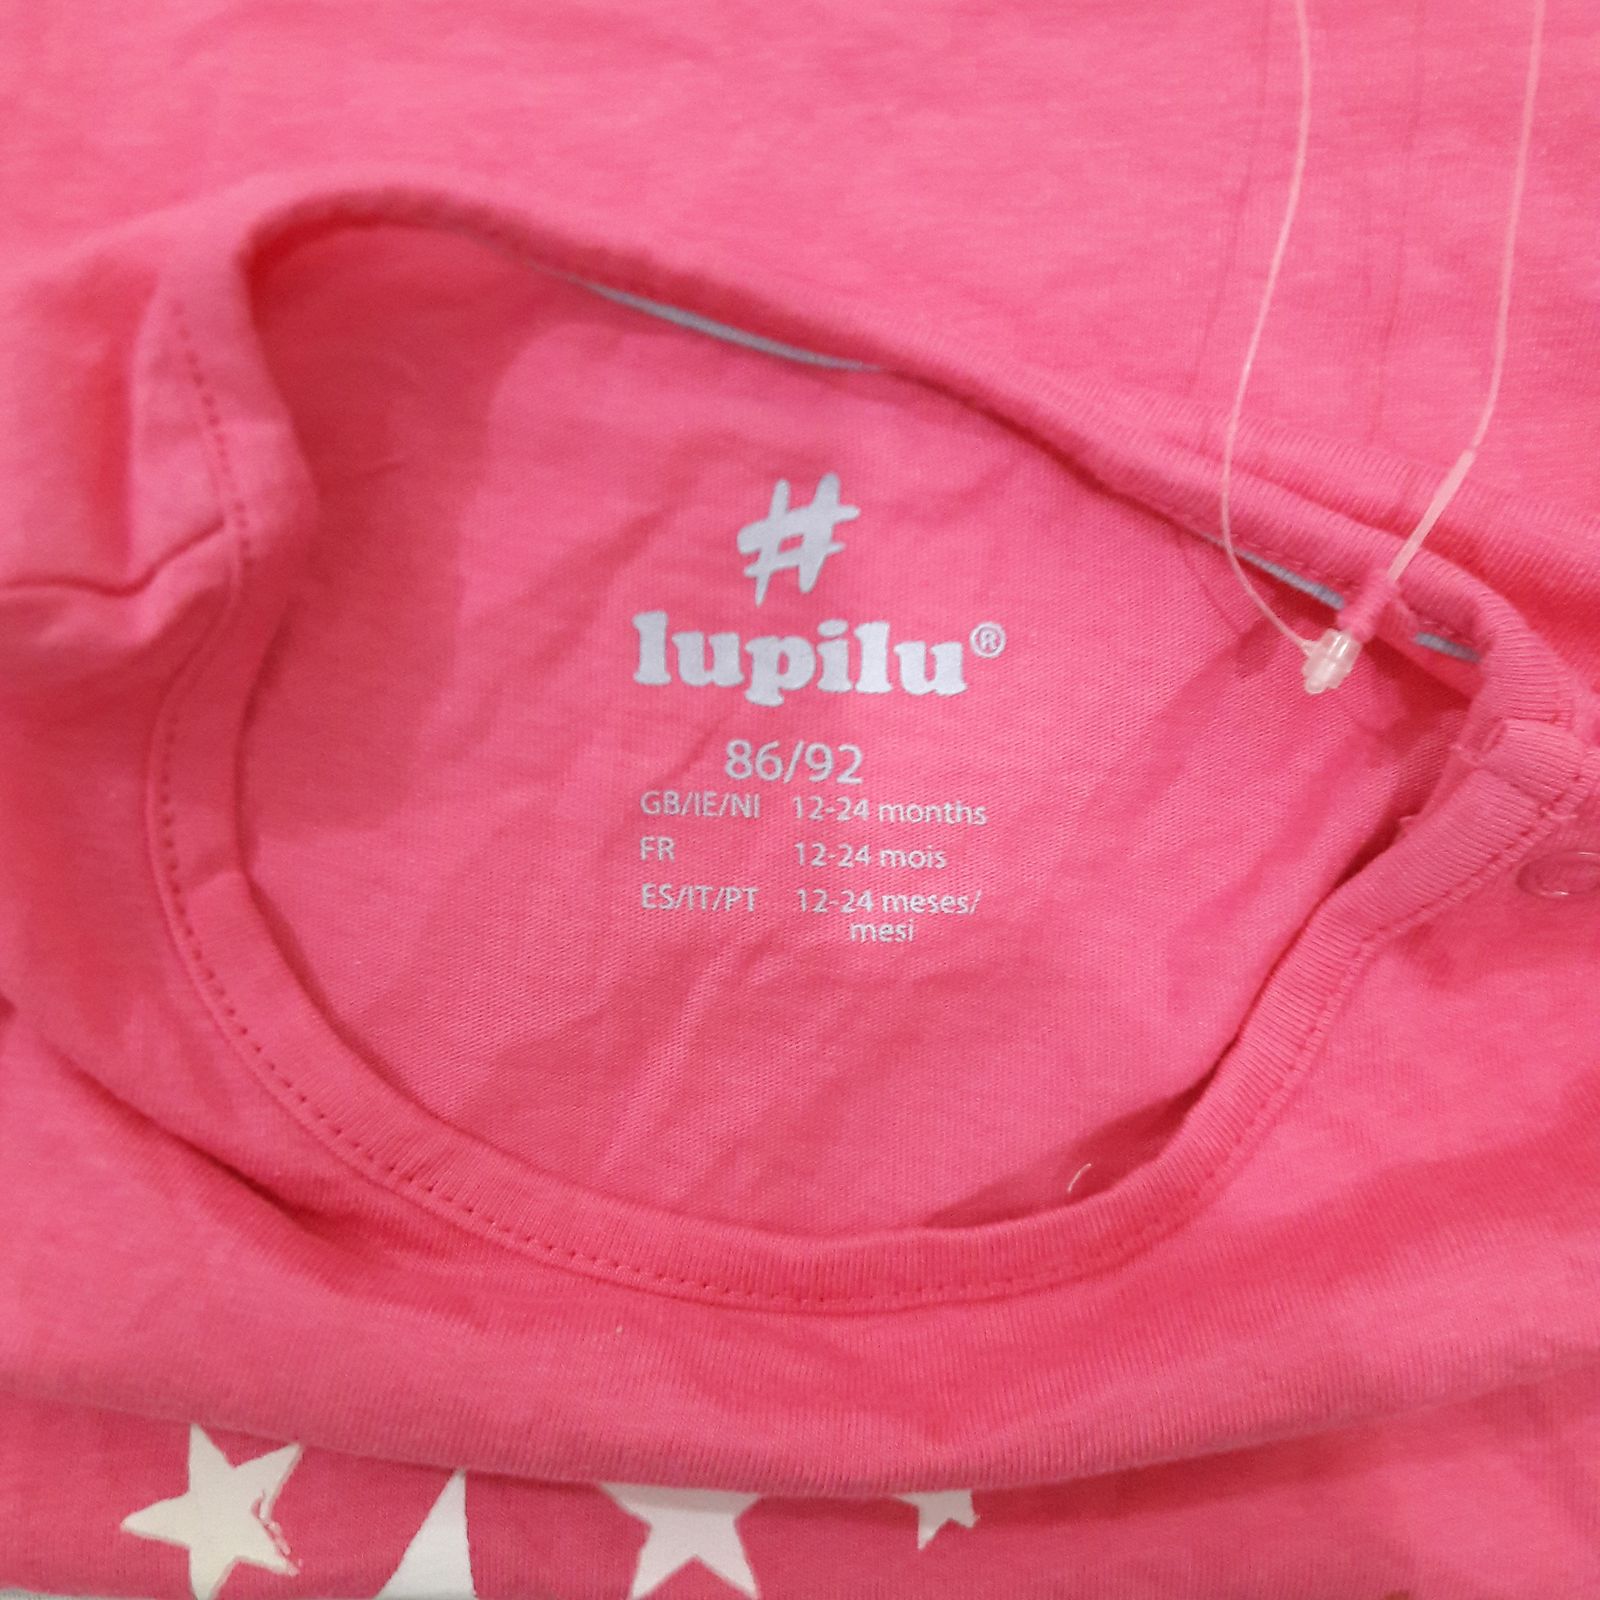 تی شرت دخترانه لوپیلو کد lusb115 -  - 2